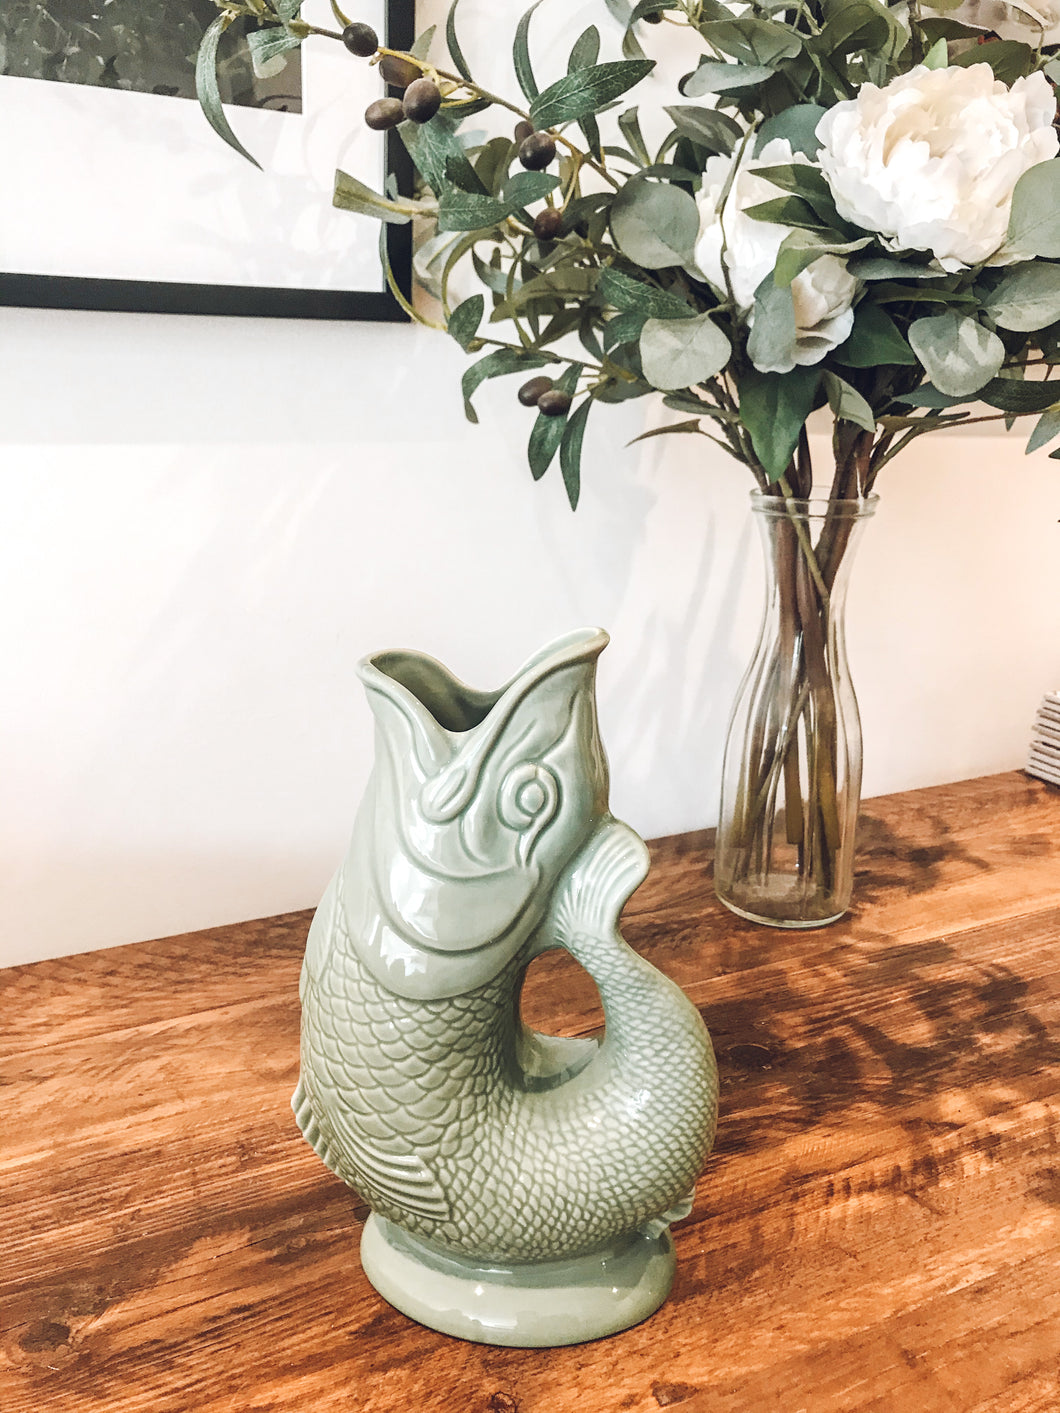 Sage green | ceramic gluggle jug | water jug | fish vase | handmade in England